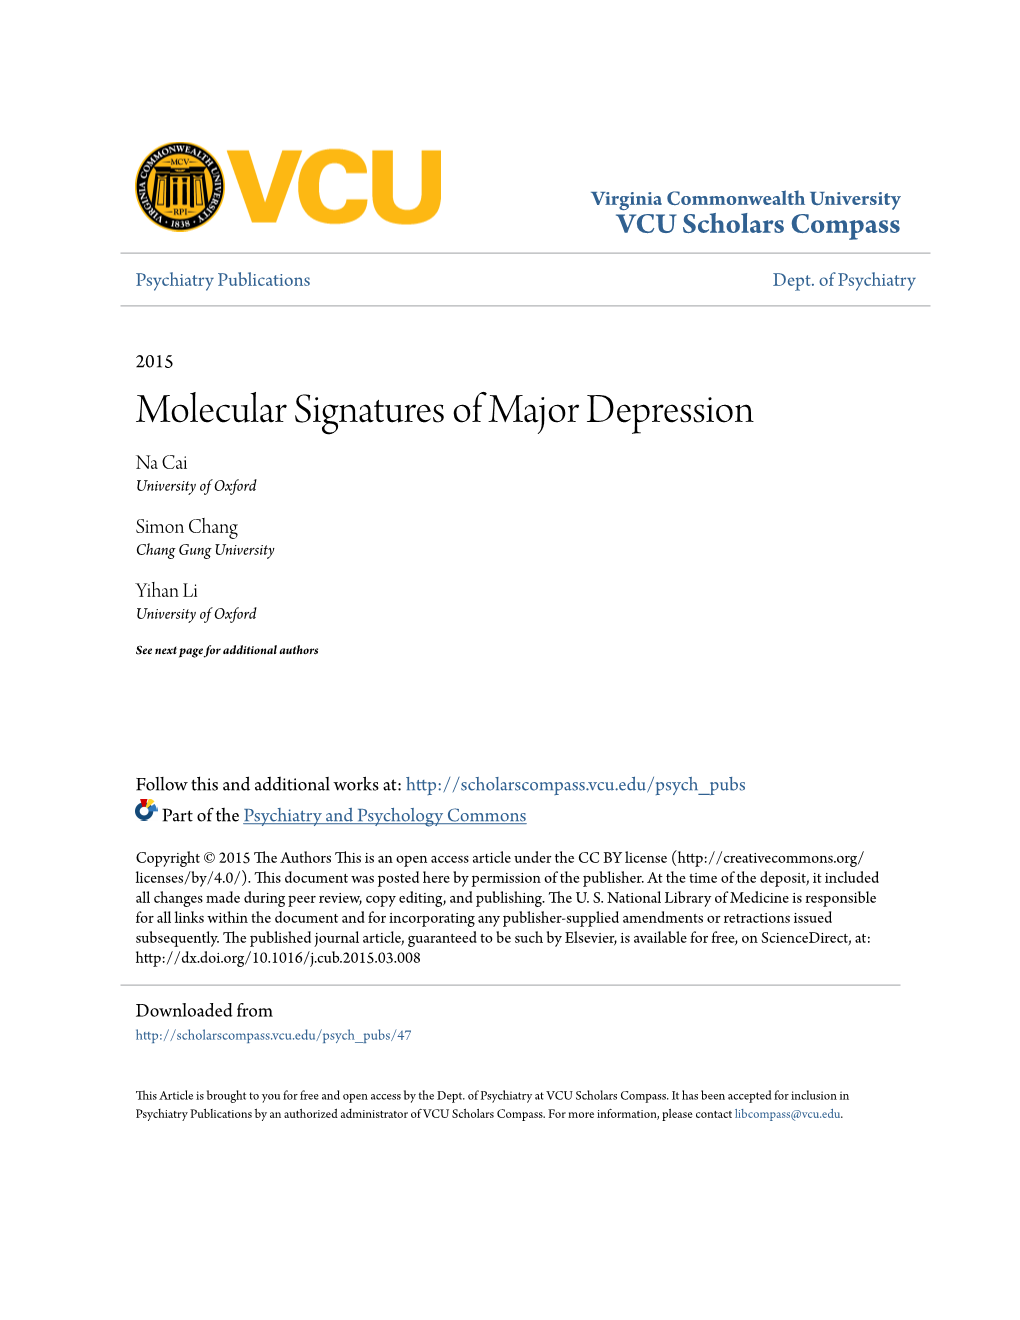 Molecular Signatures of Major Depression Na Cai University of Oxford